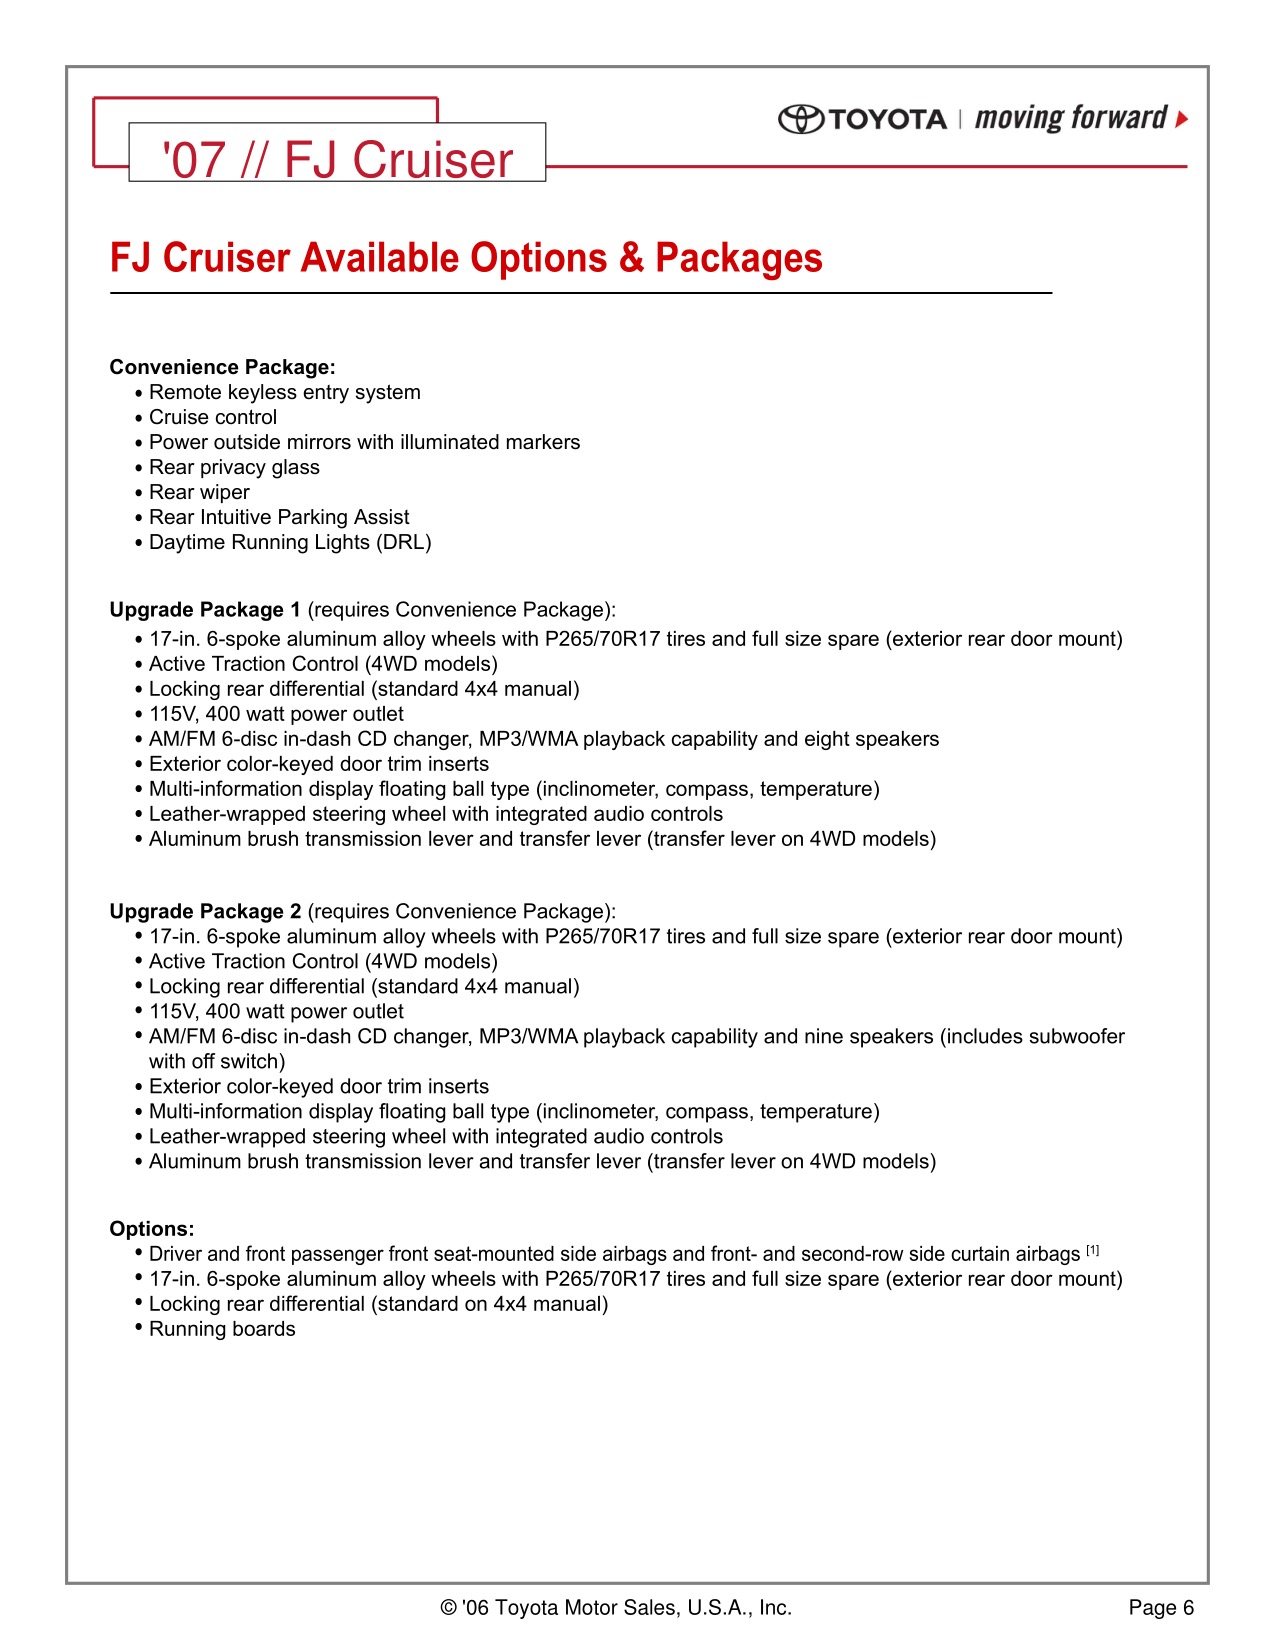 2008 Toyota FJ Cruiser Brochure Page 8